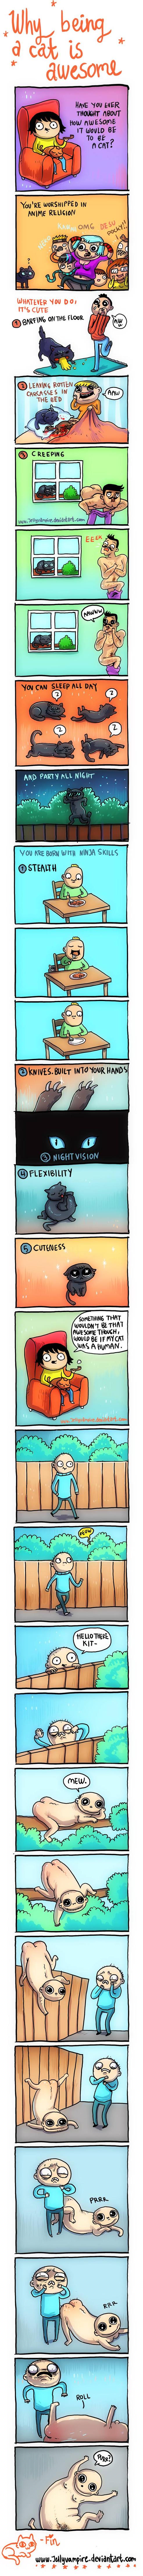 If Cat Would Be Human,Cats meme,Cats Comic,Cat Meme,Cat Comic